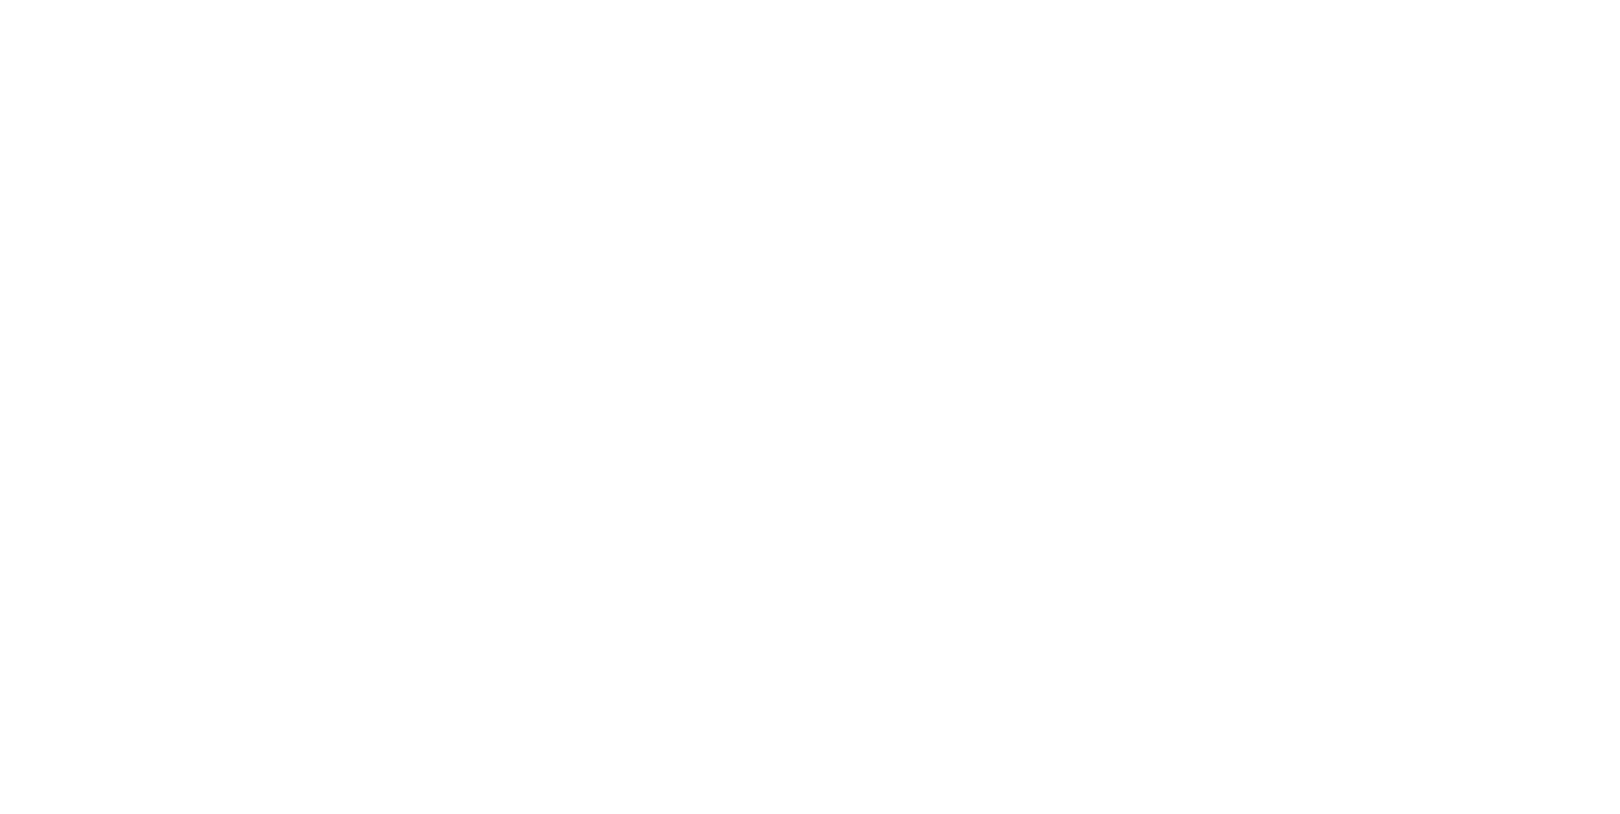 Alignment Healthcare logo large for dark backgrounds (transparent PNG)